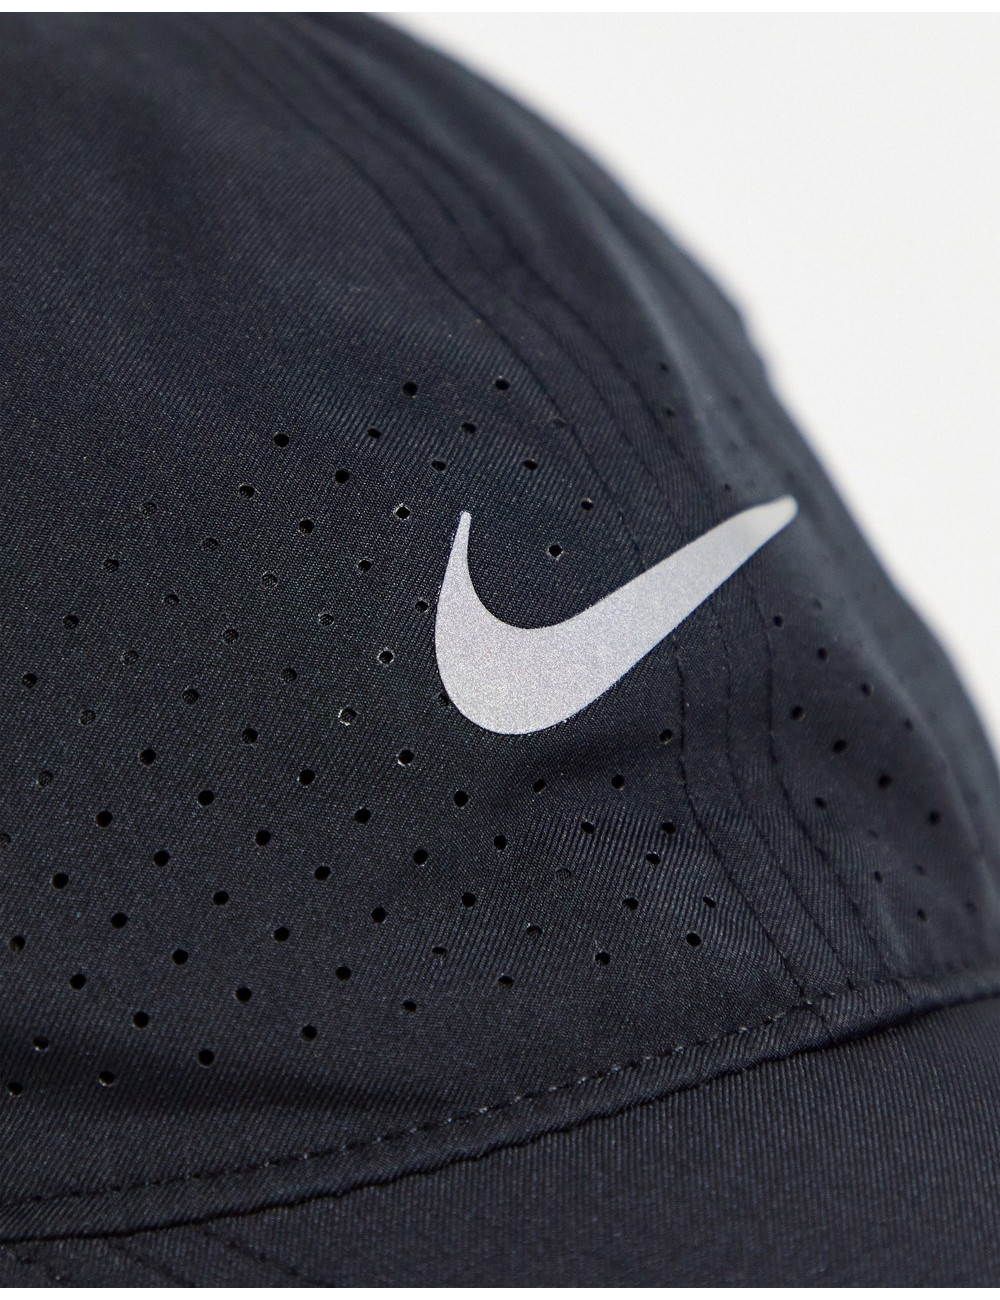 Nike Running cap in black